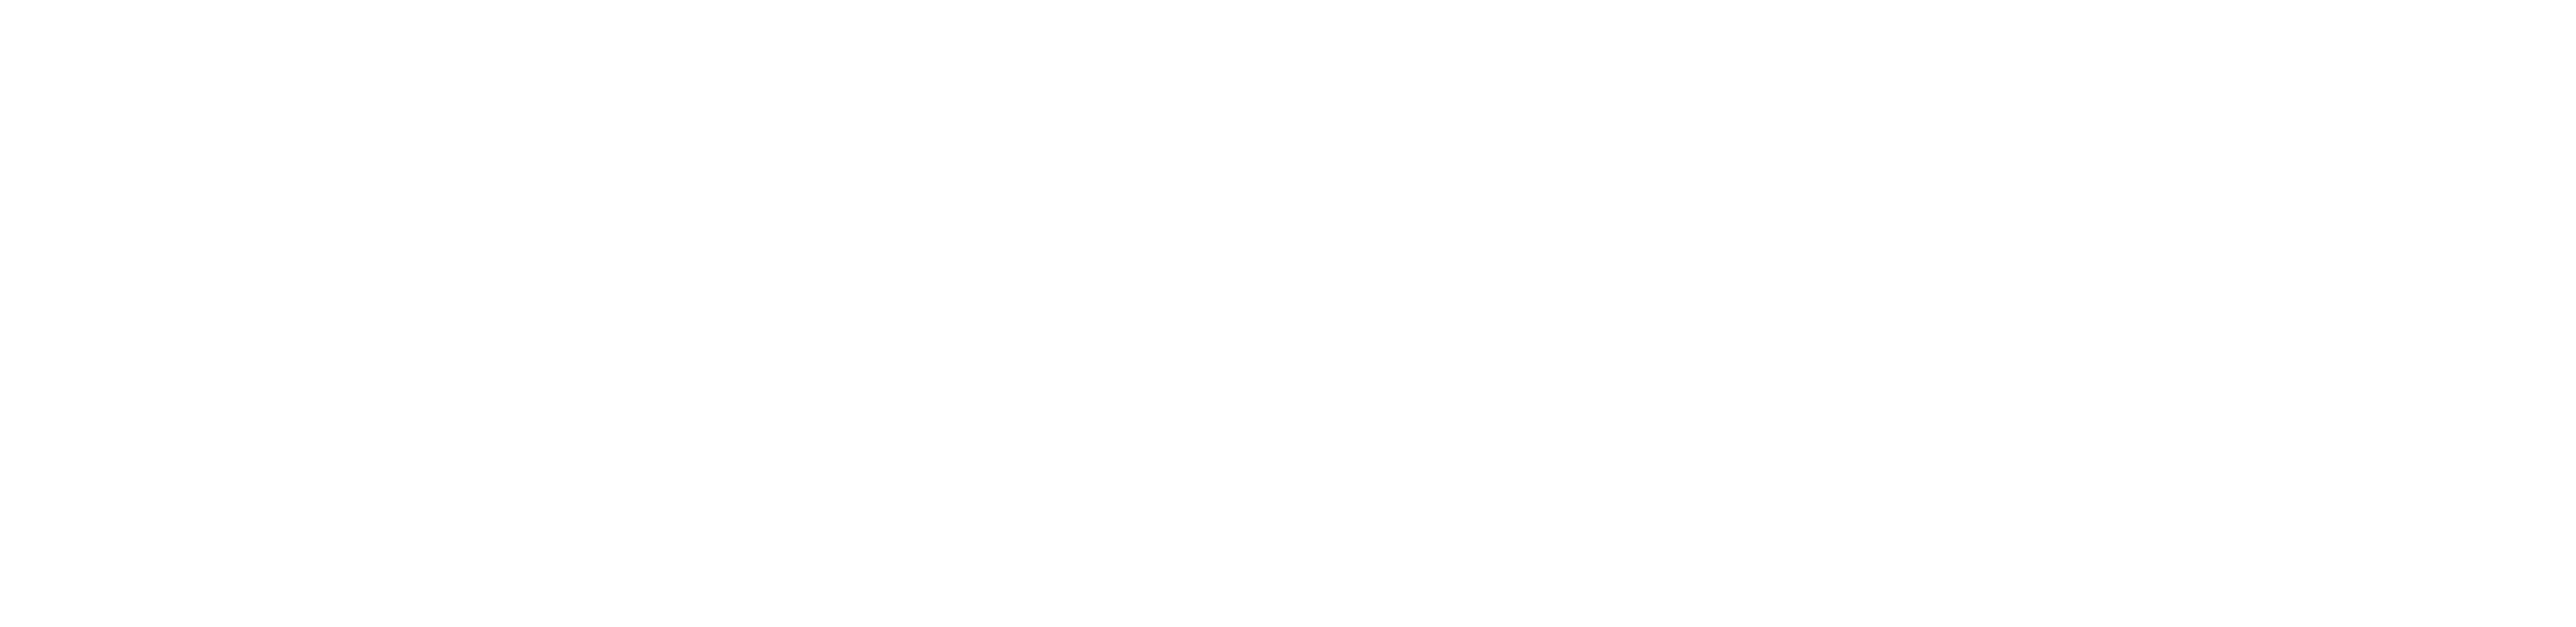 All Hands and Hearts logo logo